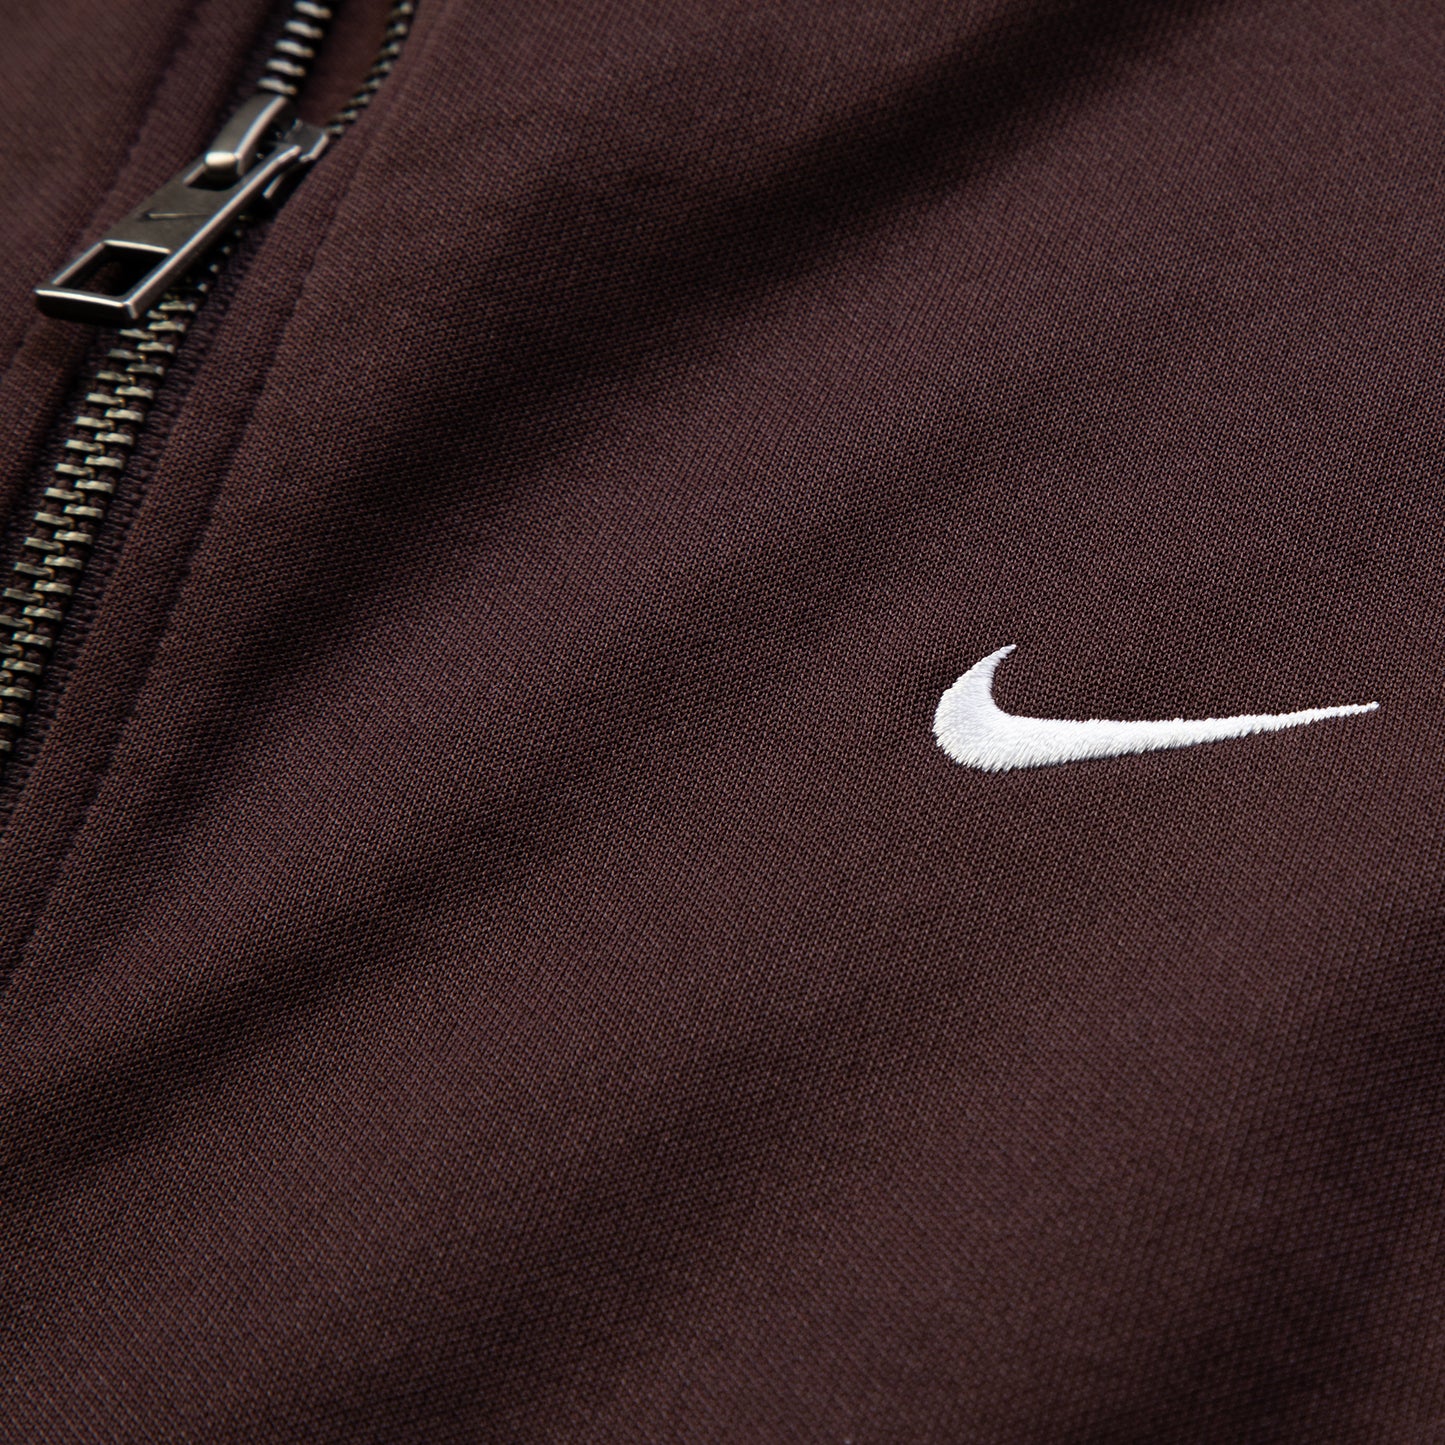 Nike Sportswear Track Jacket (Brown/White)